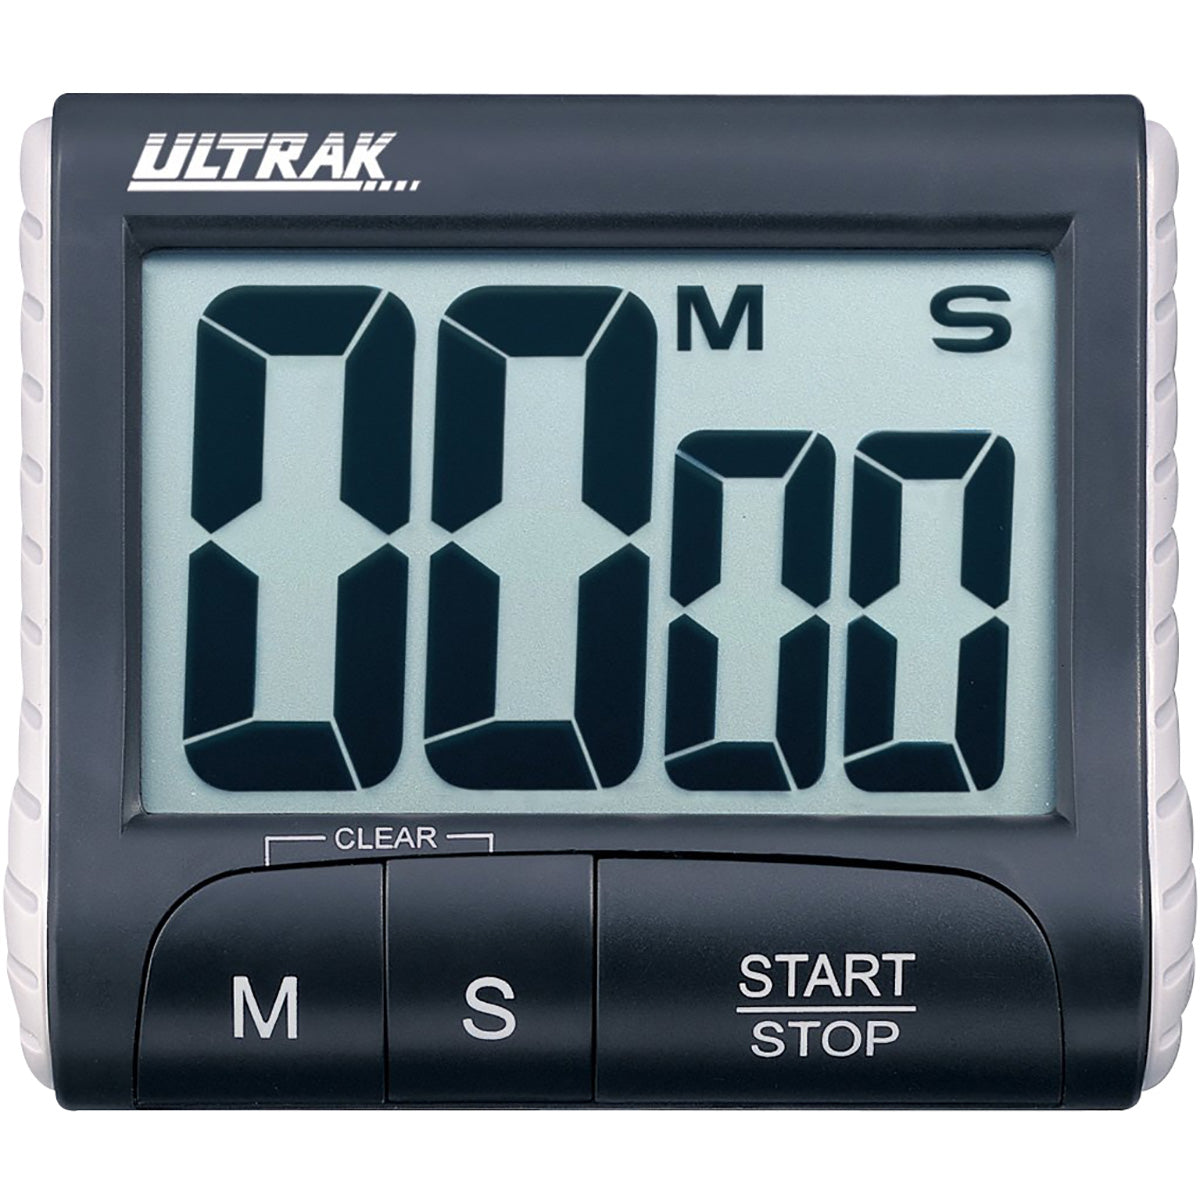 Ultrak T2 Jumbo Display Single Countdown Timer Ultrak